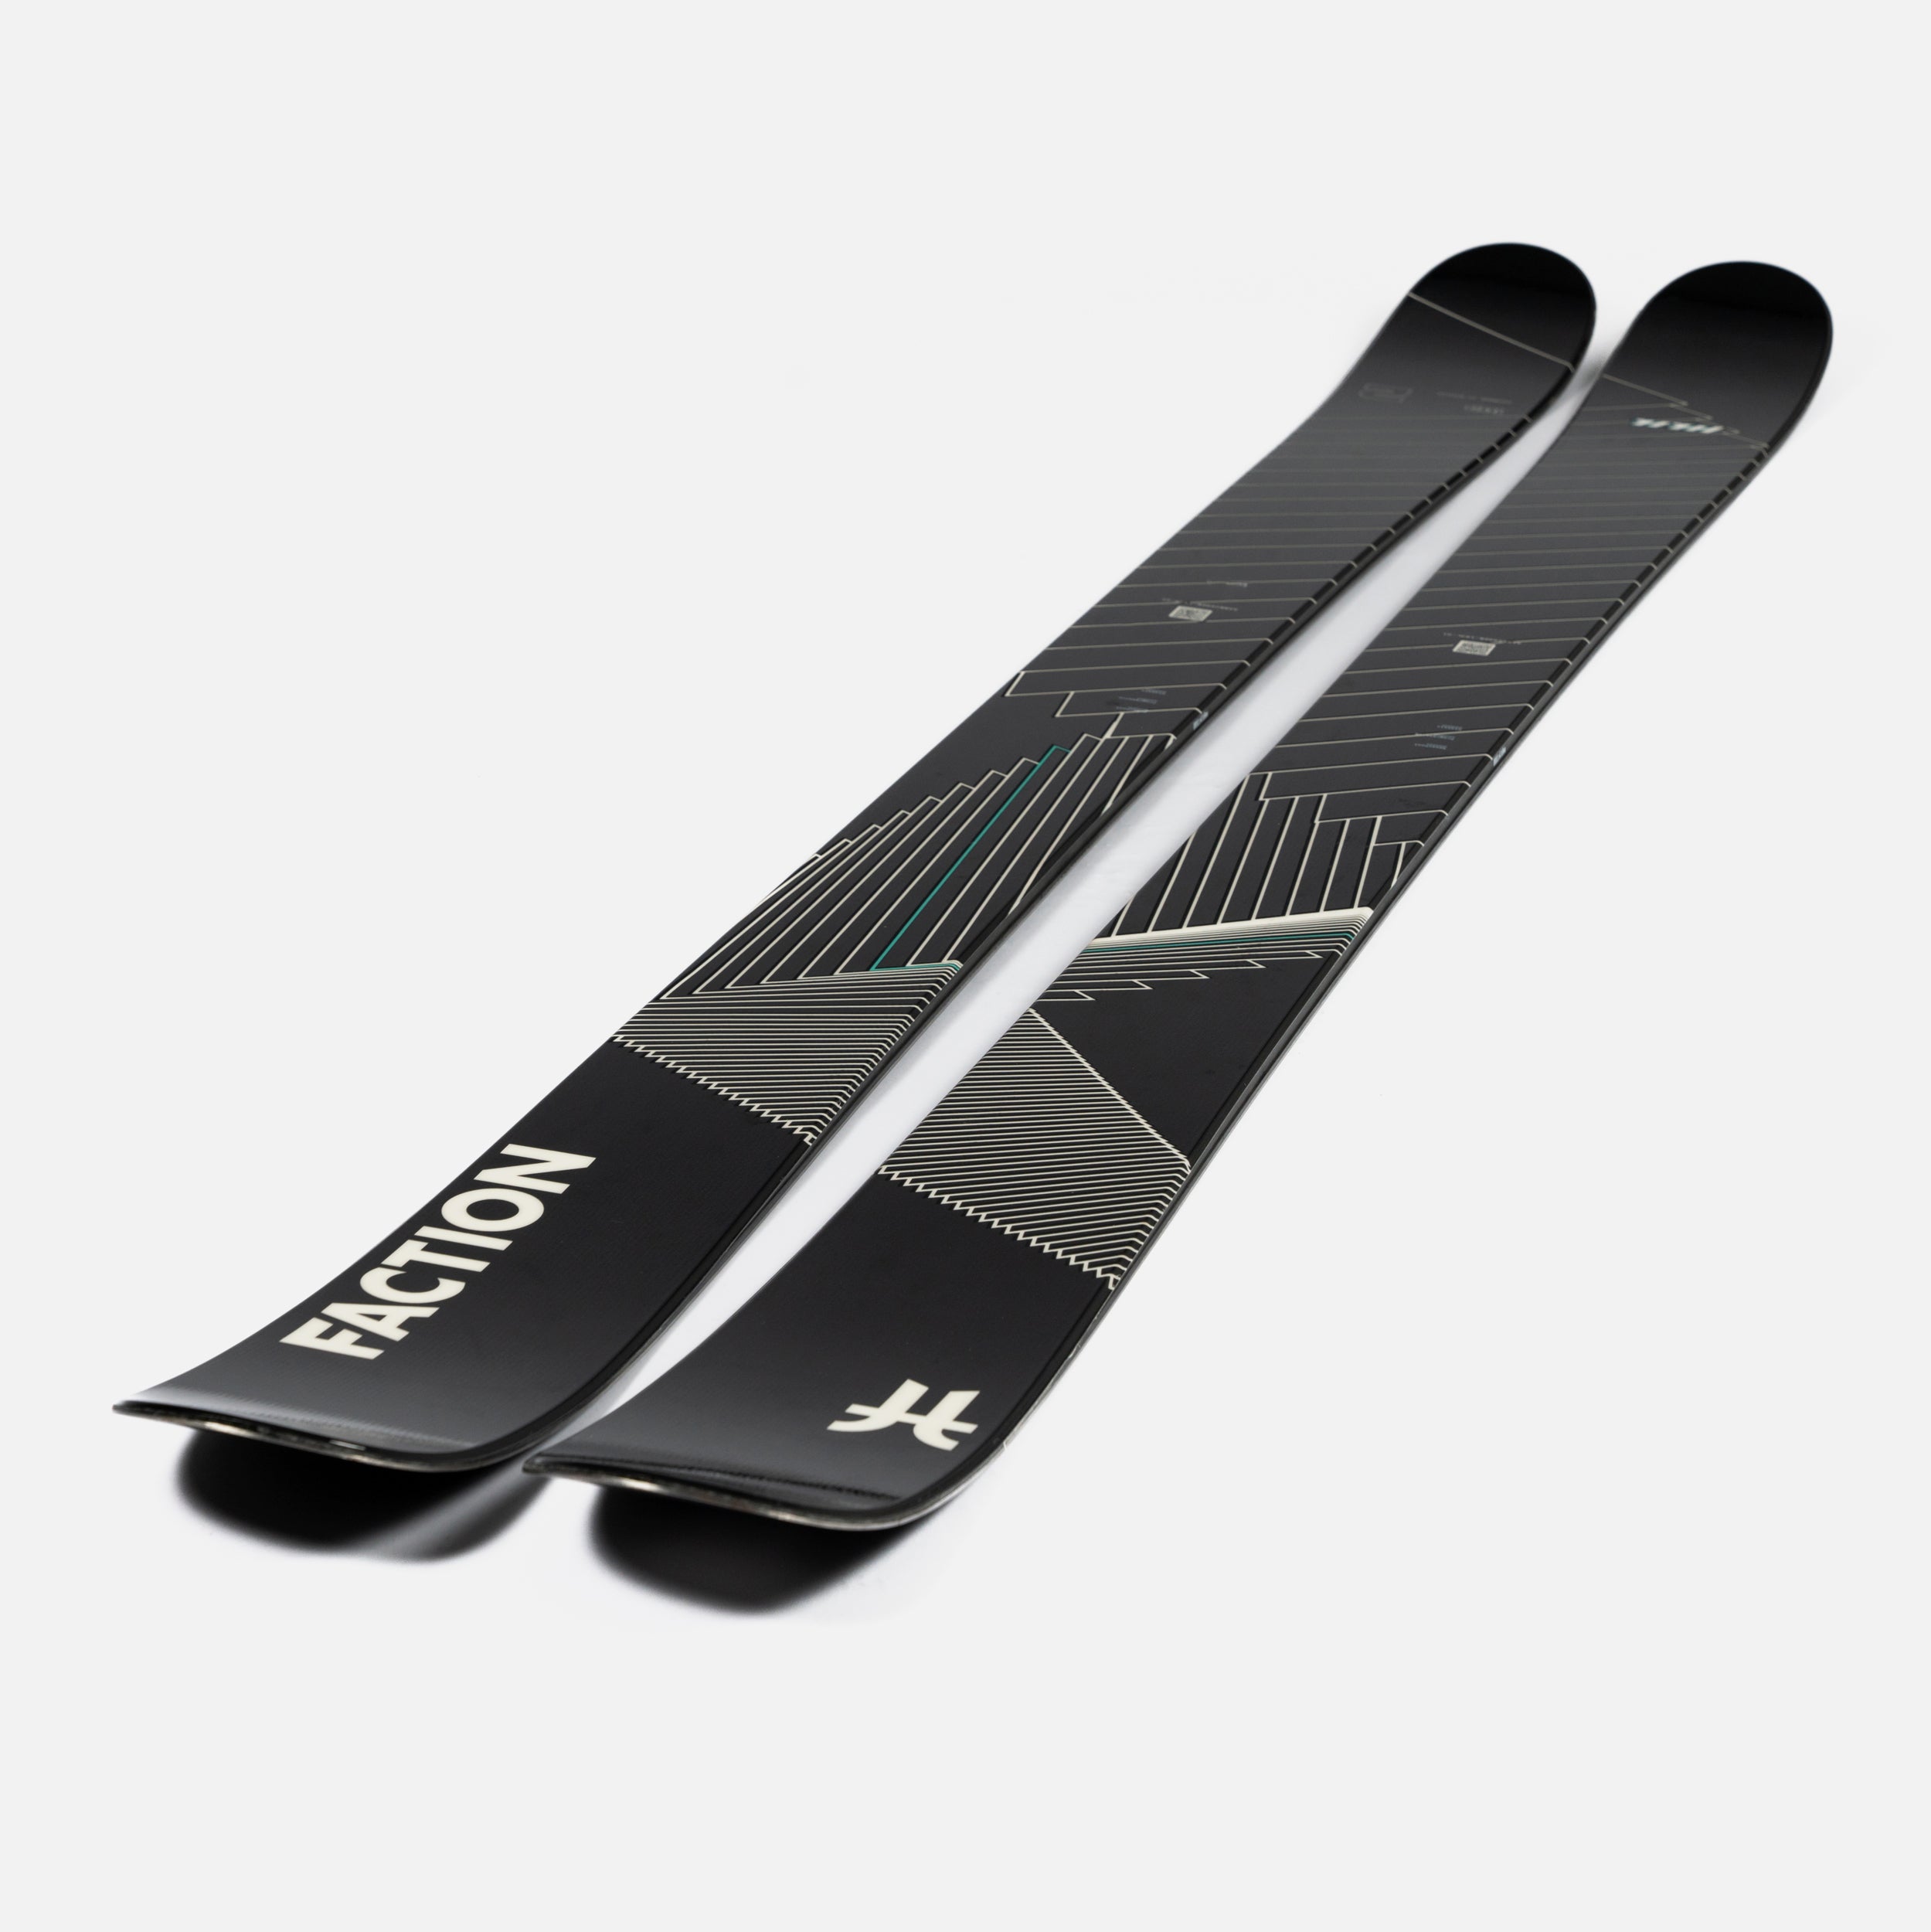 Sale | Skis | Faction Skis – Faction Skis US